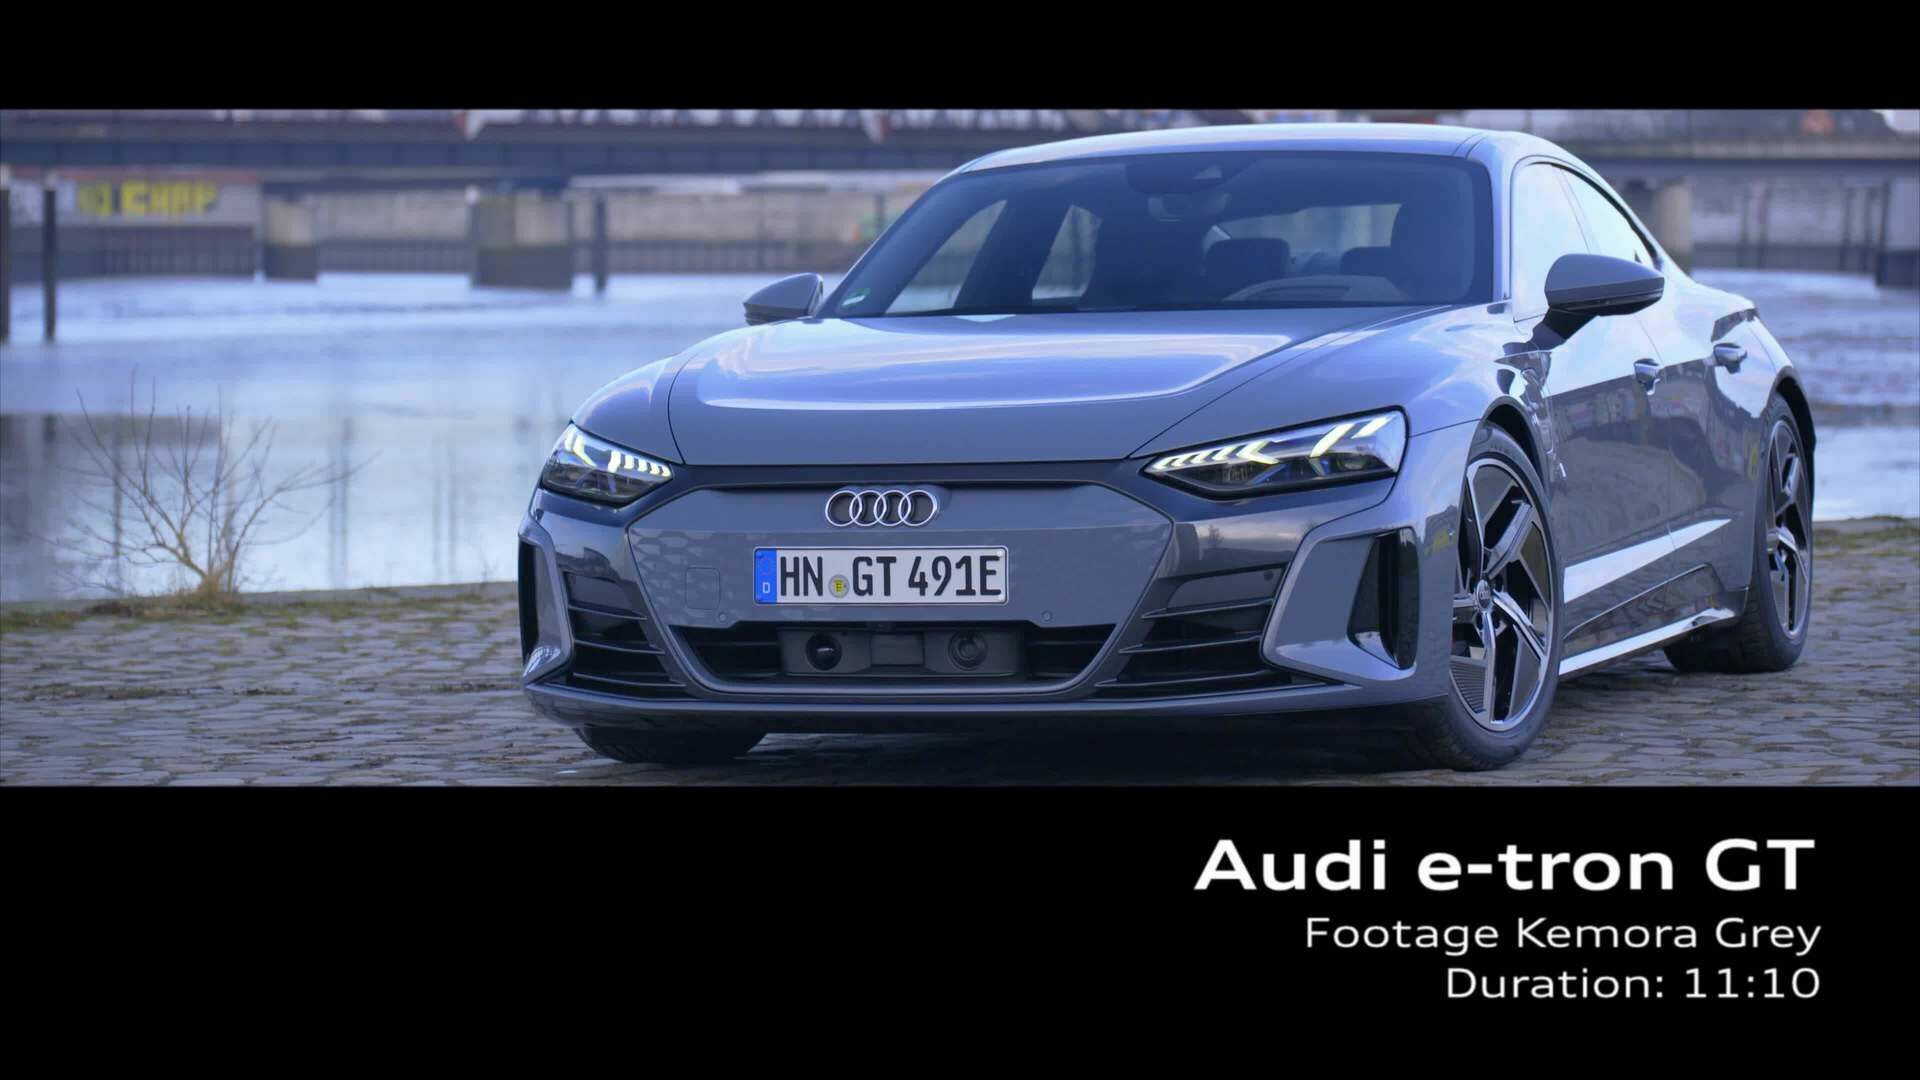 Footage: Audi e-tron GT Kemora Grey